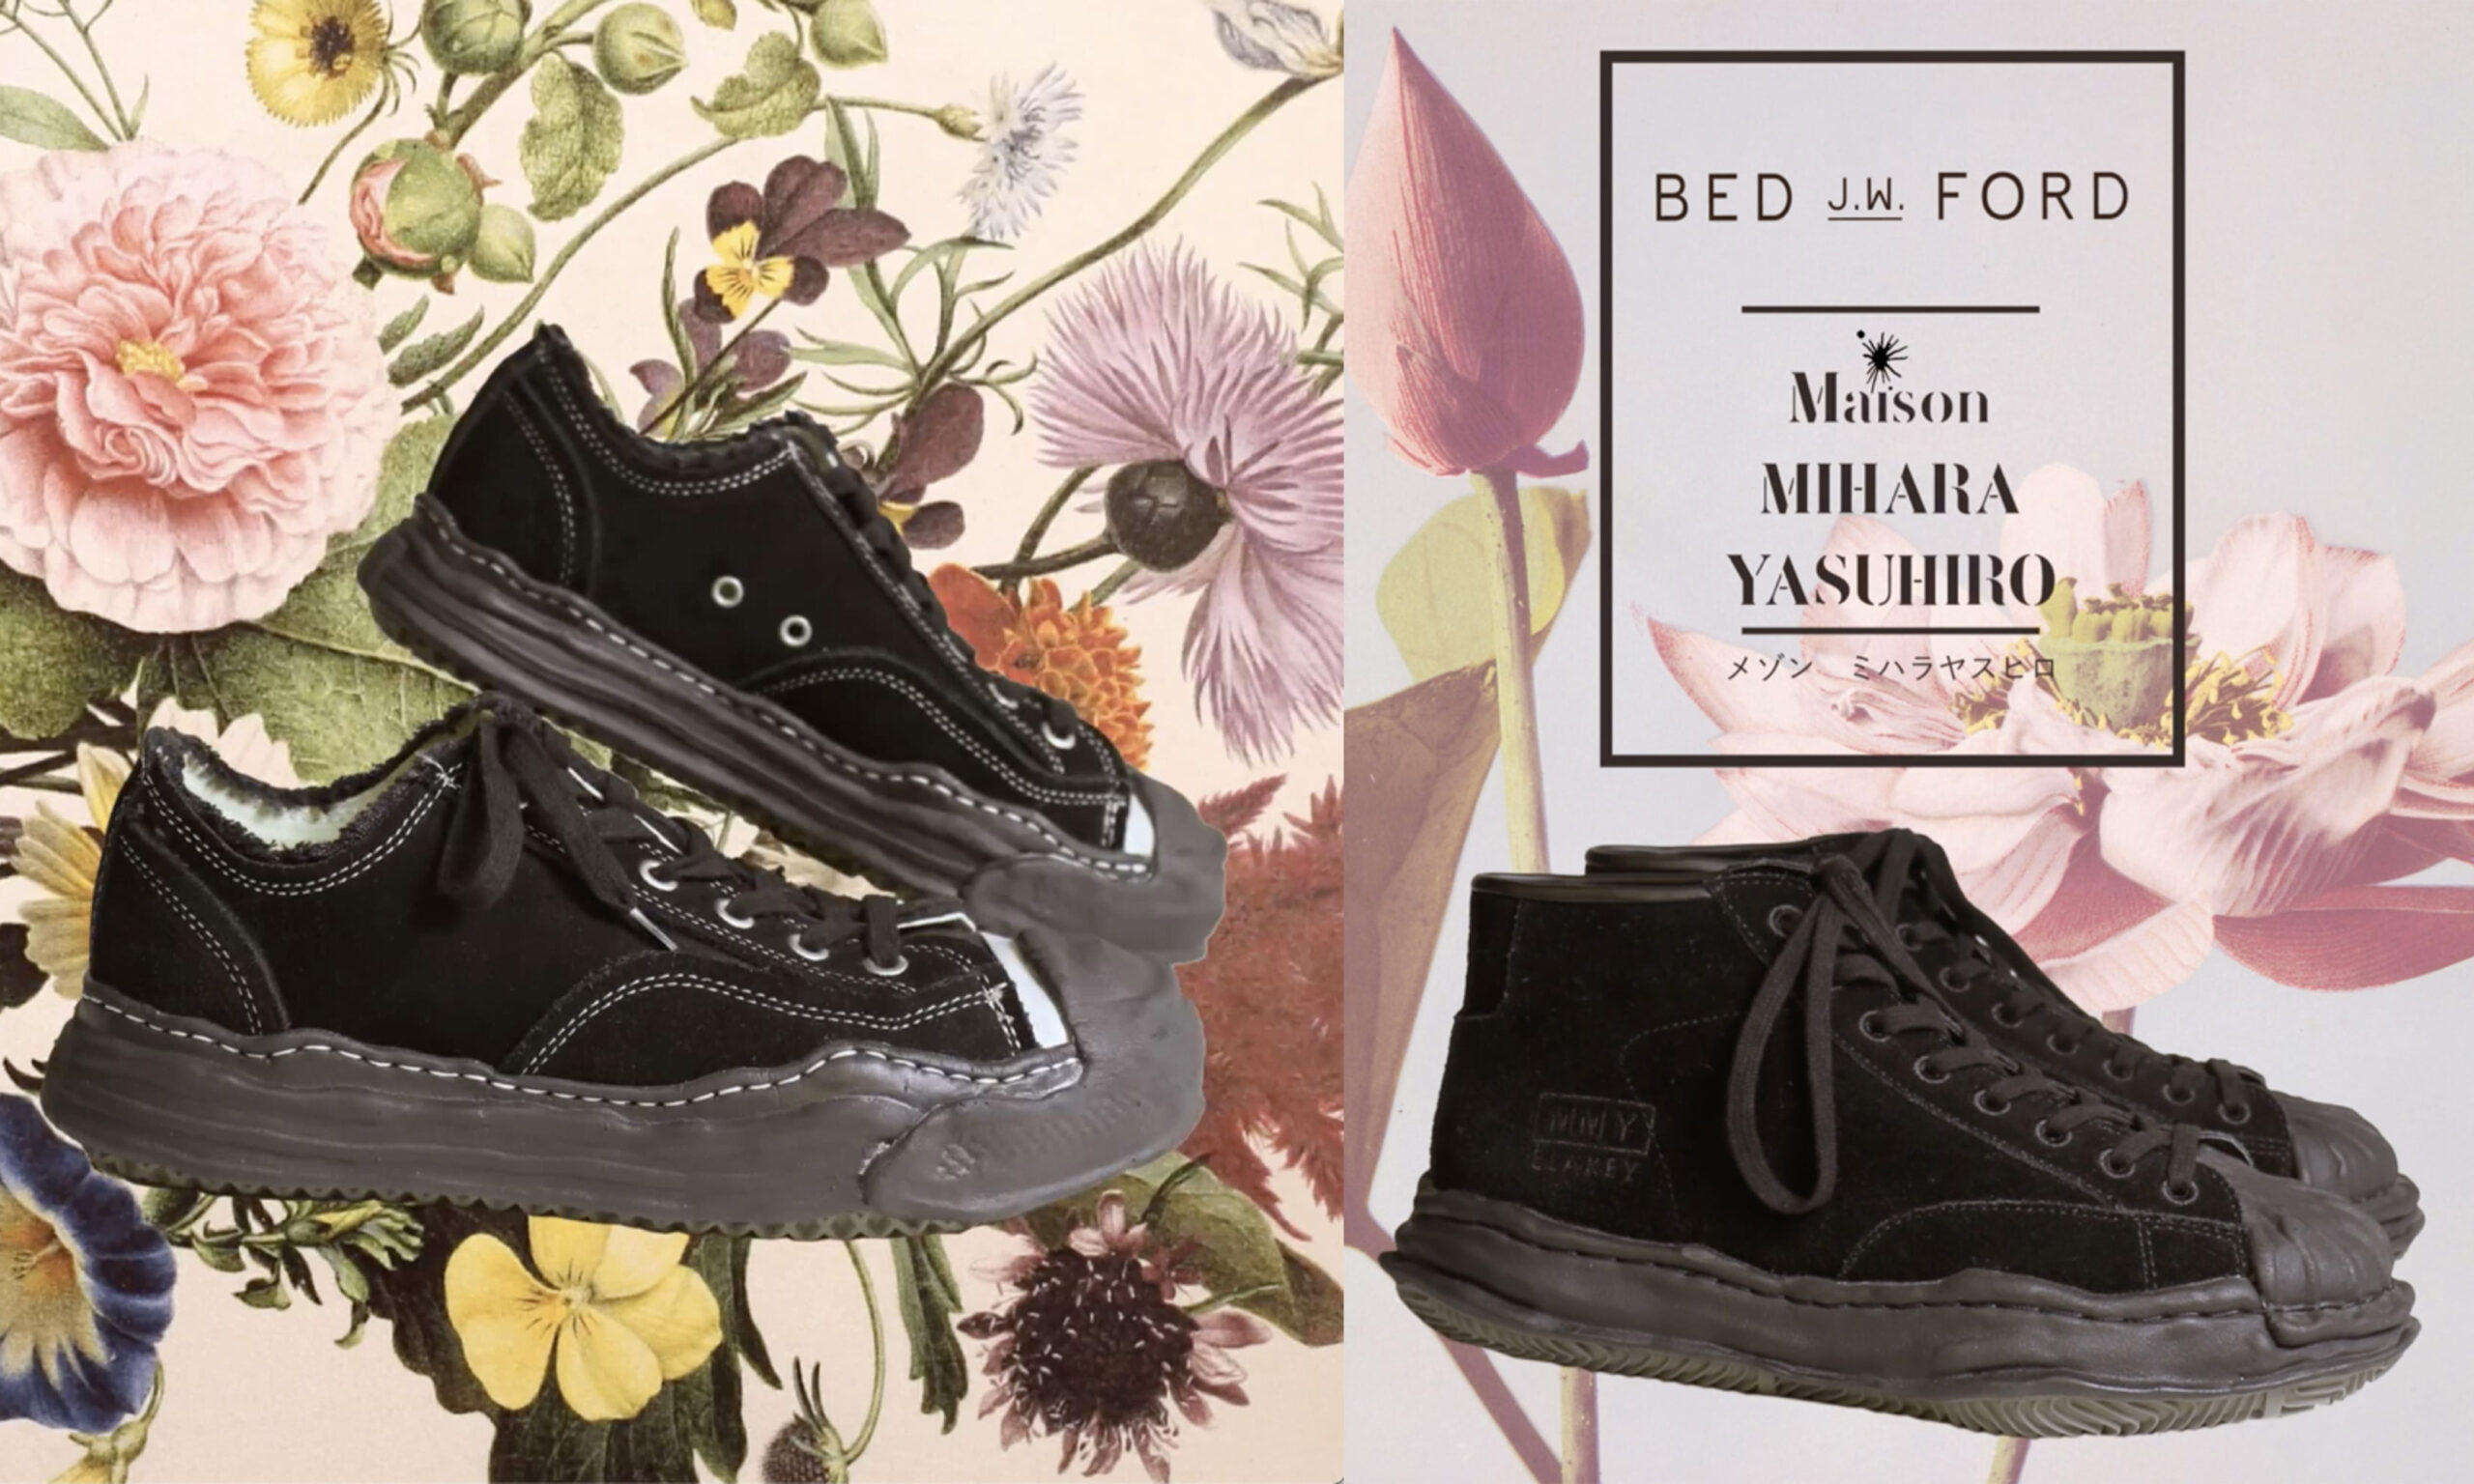 Maison MIHARA YASUHIRO x BED jw FORD 合作鞋款即将发售